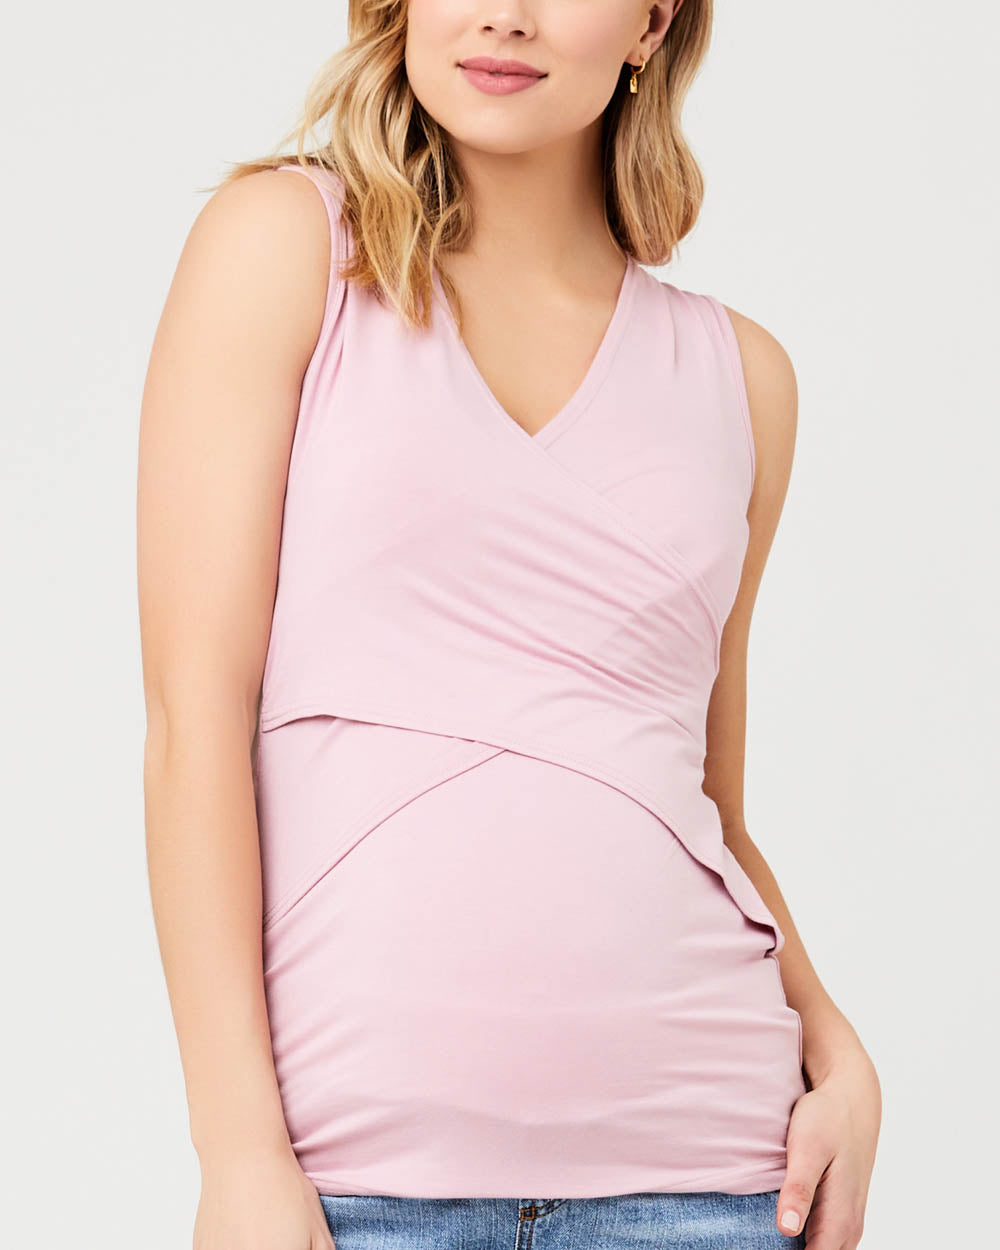 Ripe Maternity 'Embrace' Nursing Tank - Dusty Pink